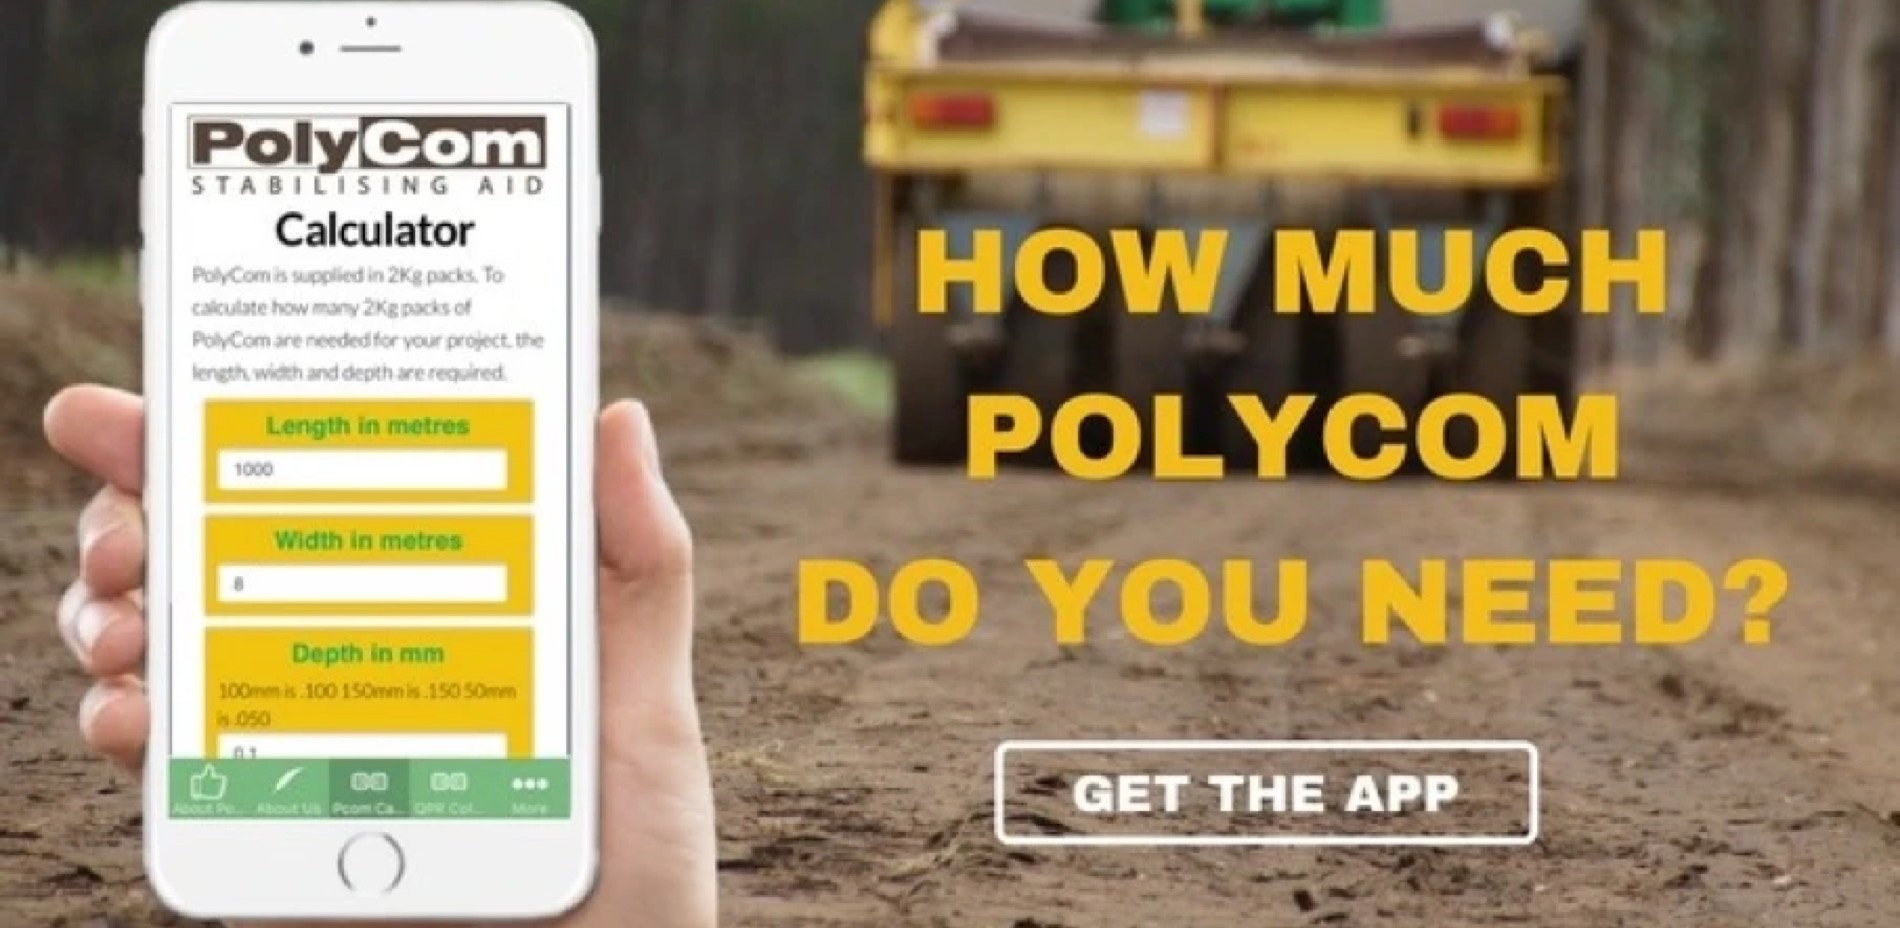 PolyCom Road Stabiliser Calculator APP for your Mobile Phone.